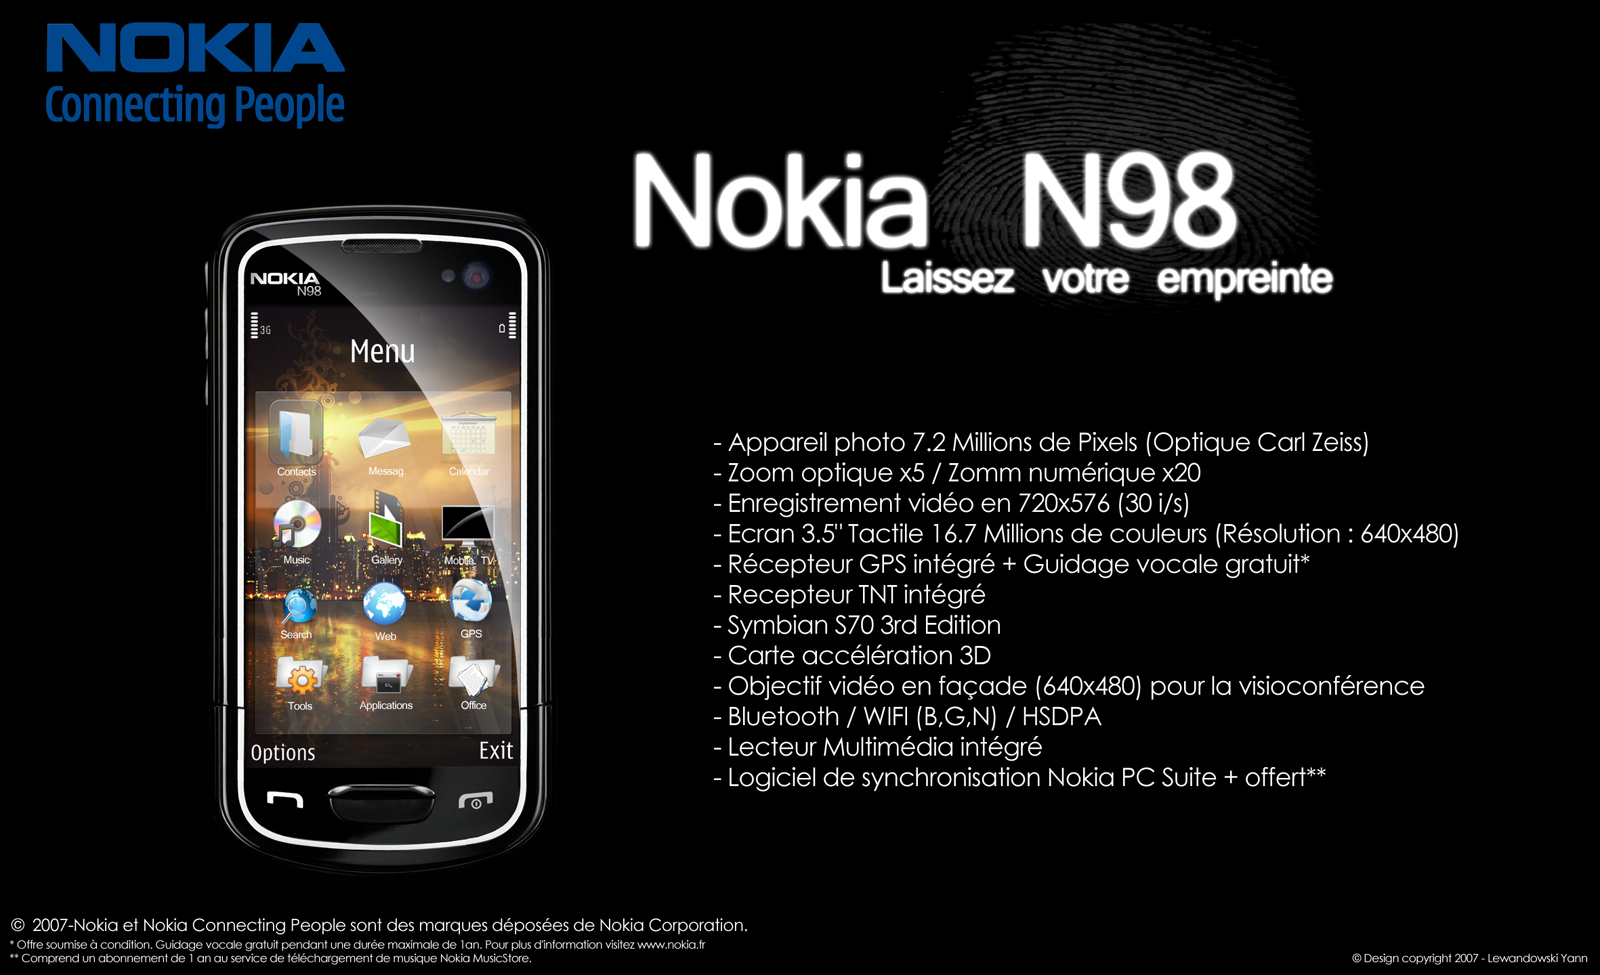 Nokia N98 Concept Design by i-visual on DeviantArt.